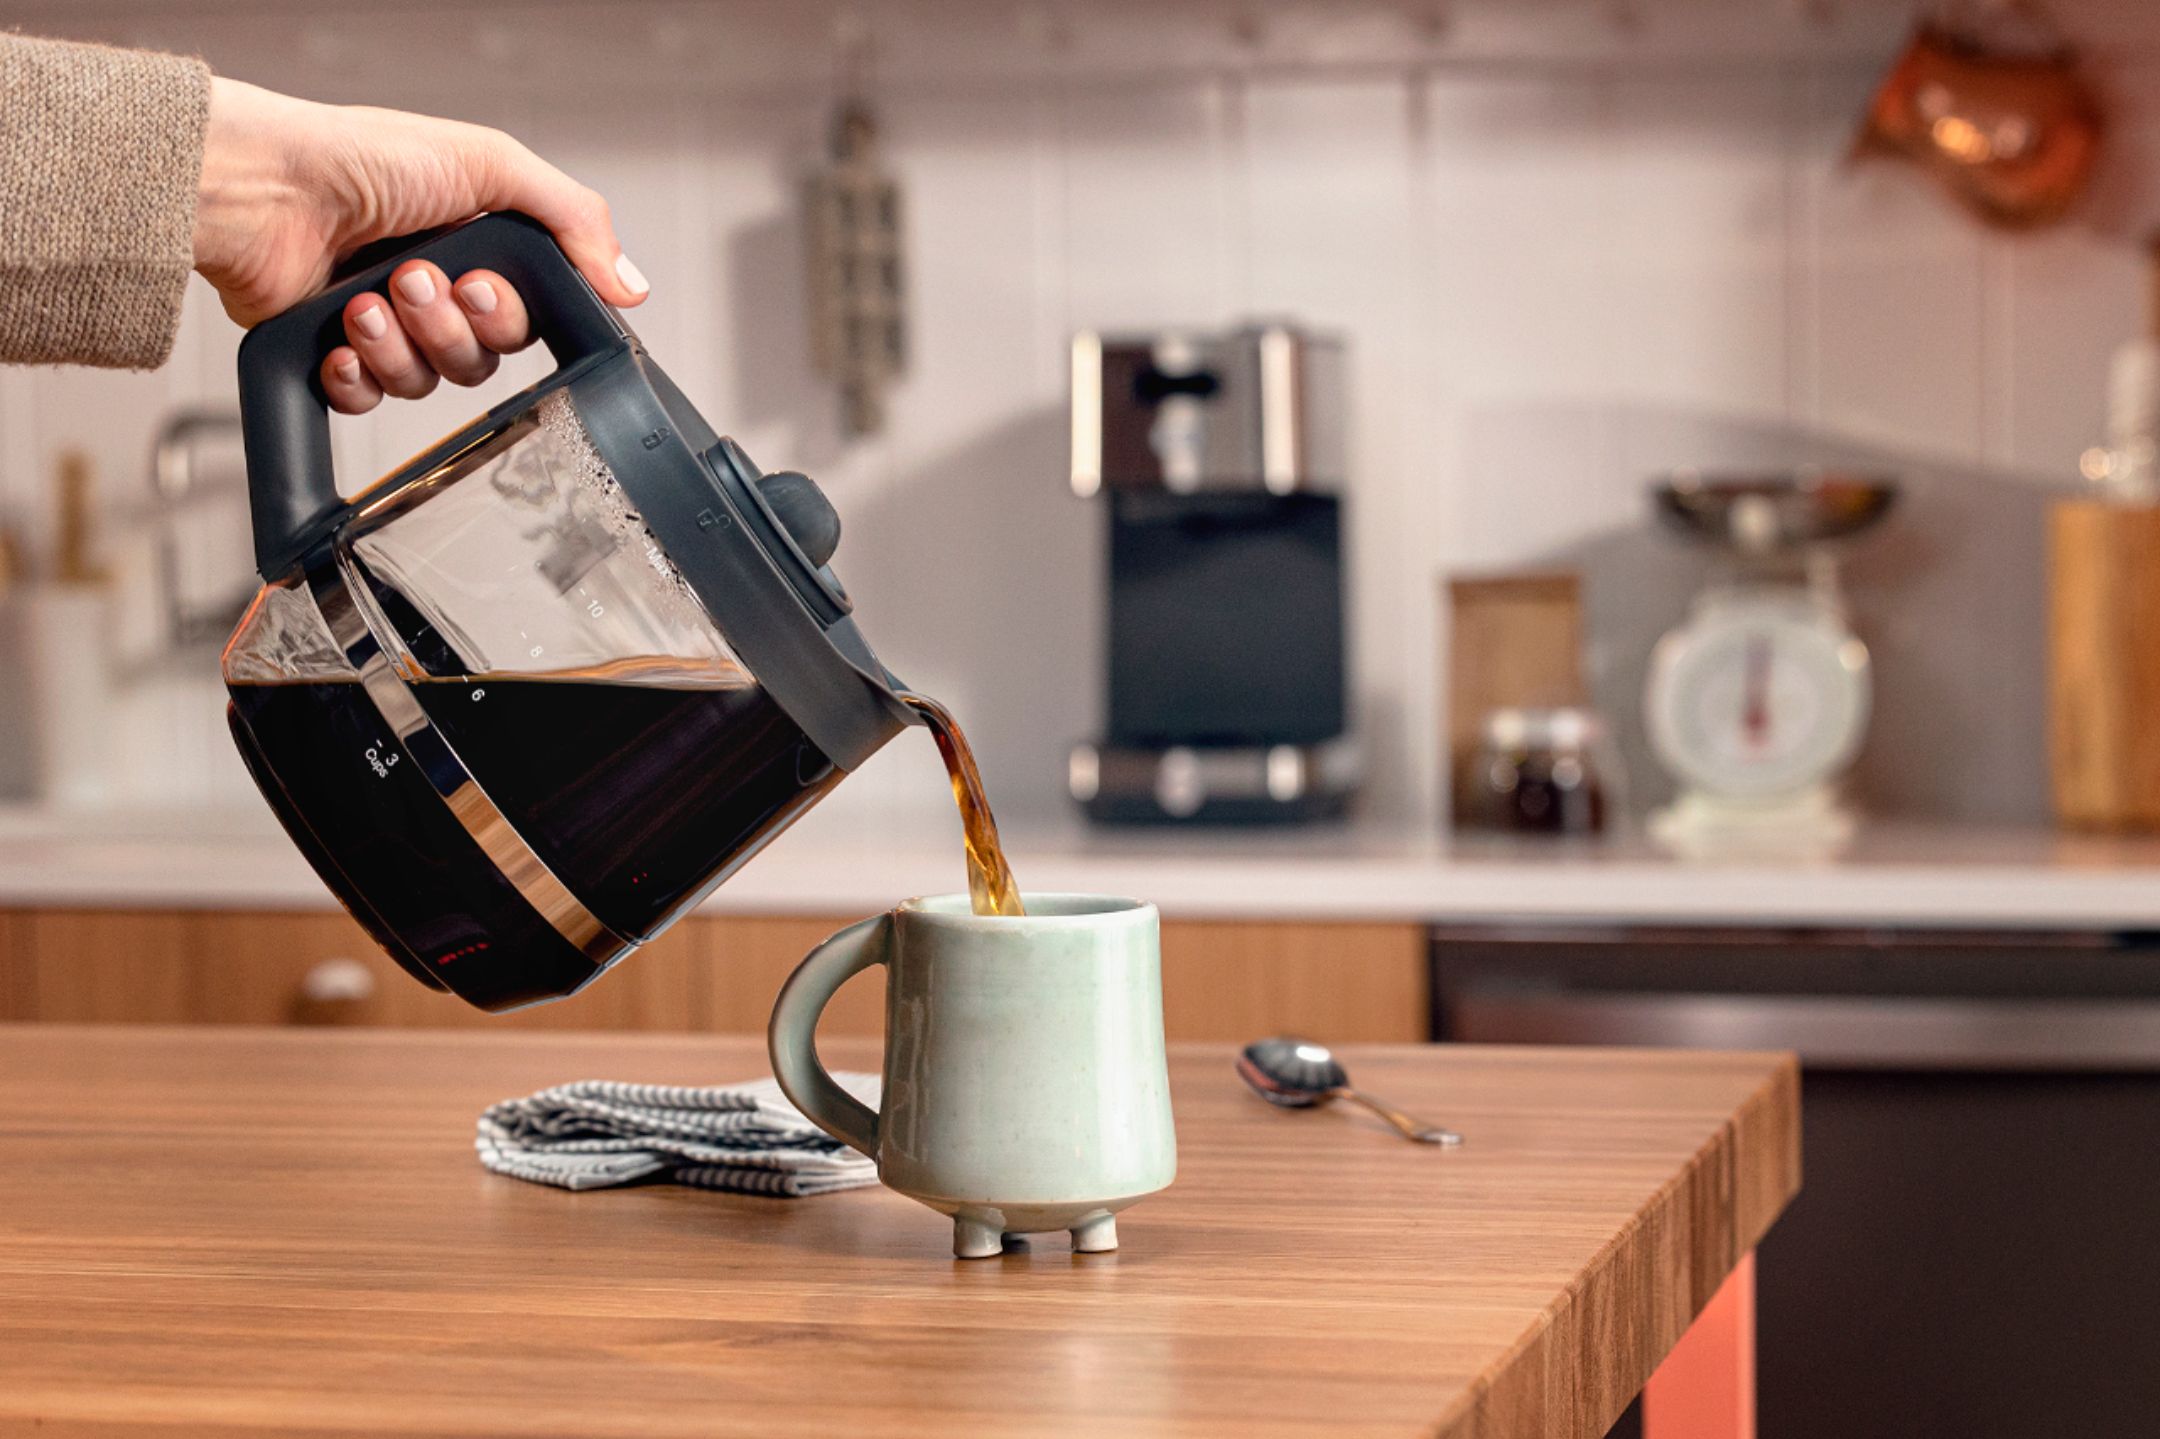 GE 12 Cup Drip Coffee Maker with Adjustable Keep Warm Plate